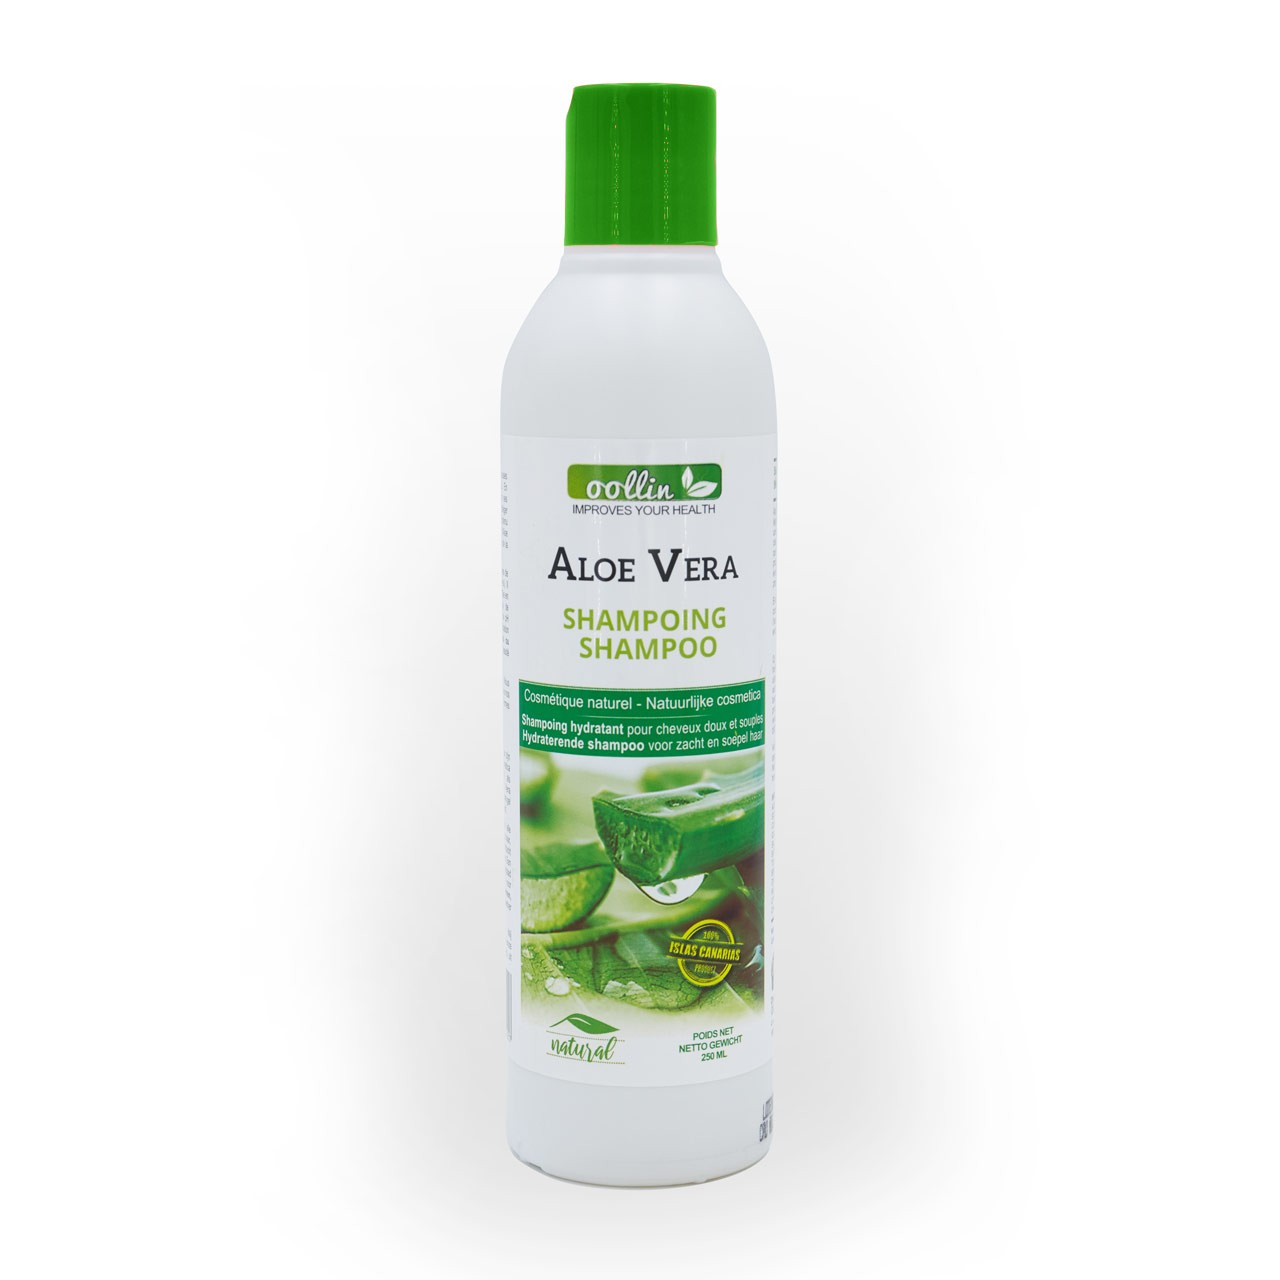 Aloe Vera shampoo 250ml. Oollin